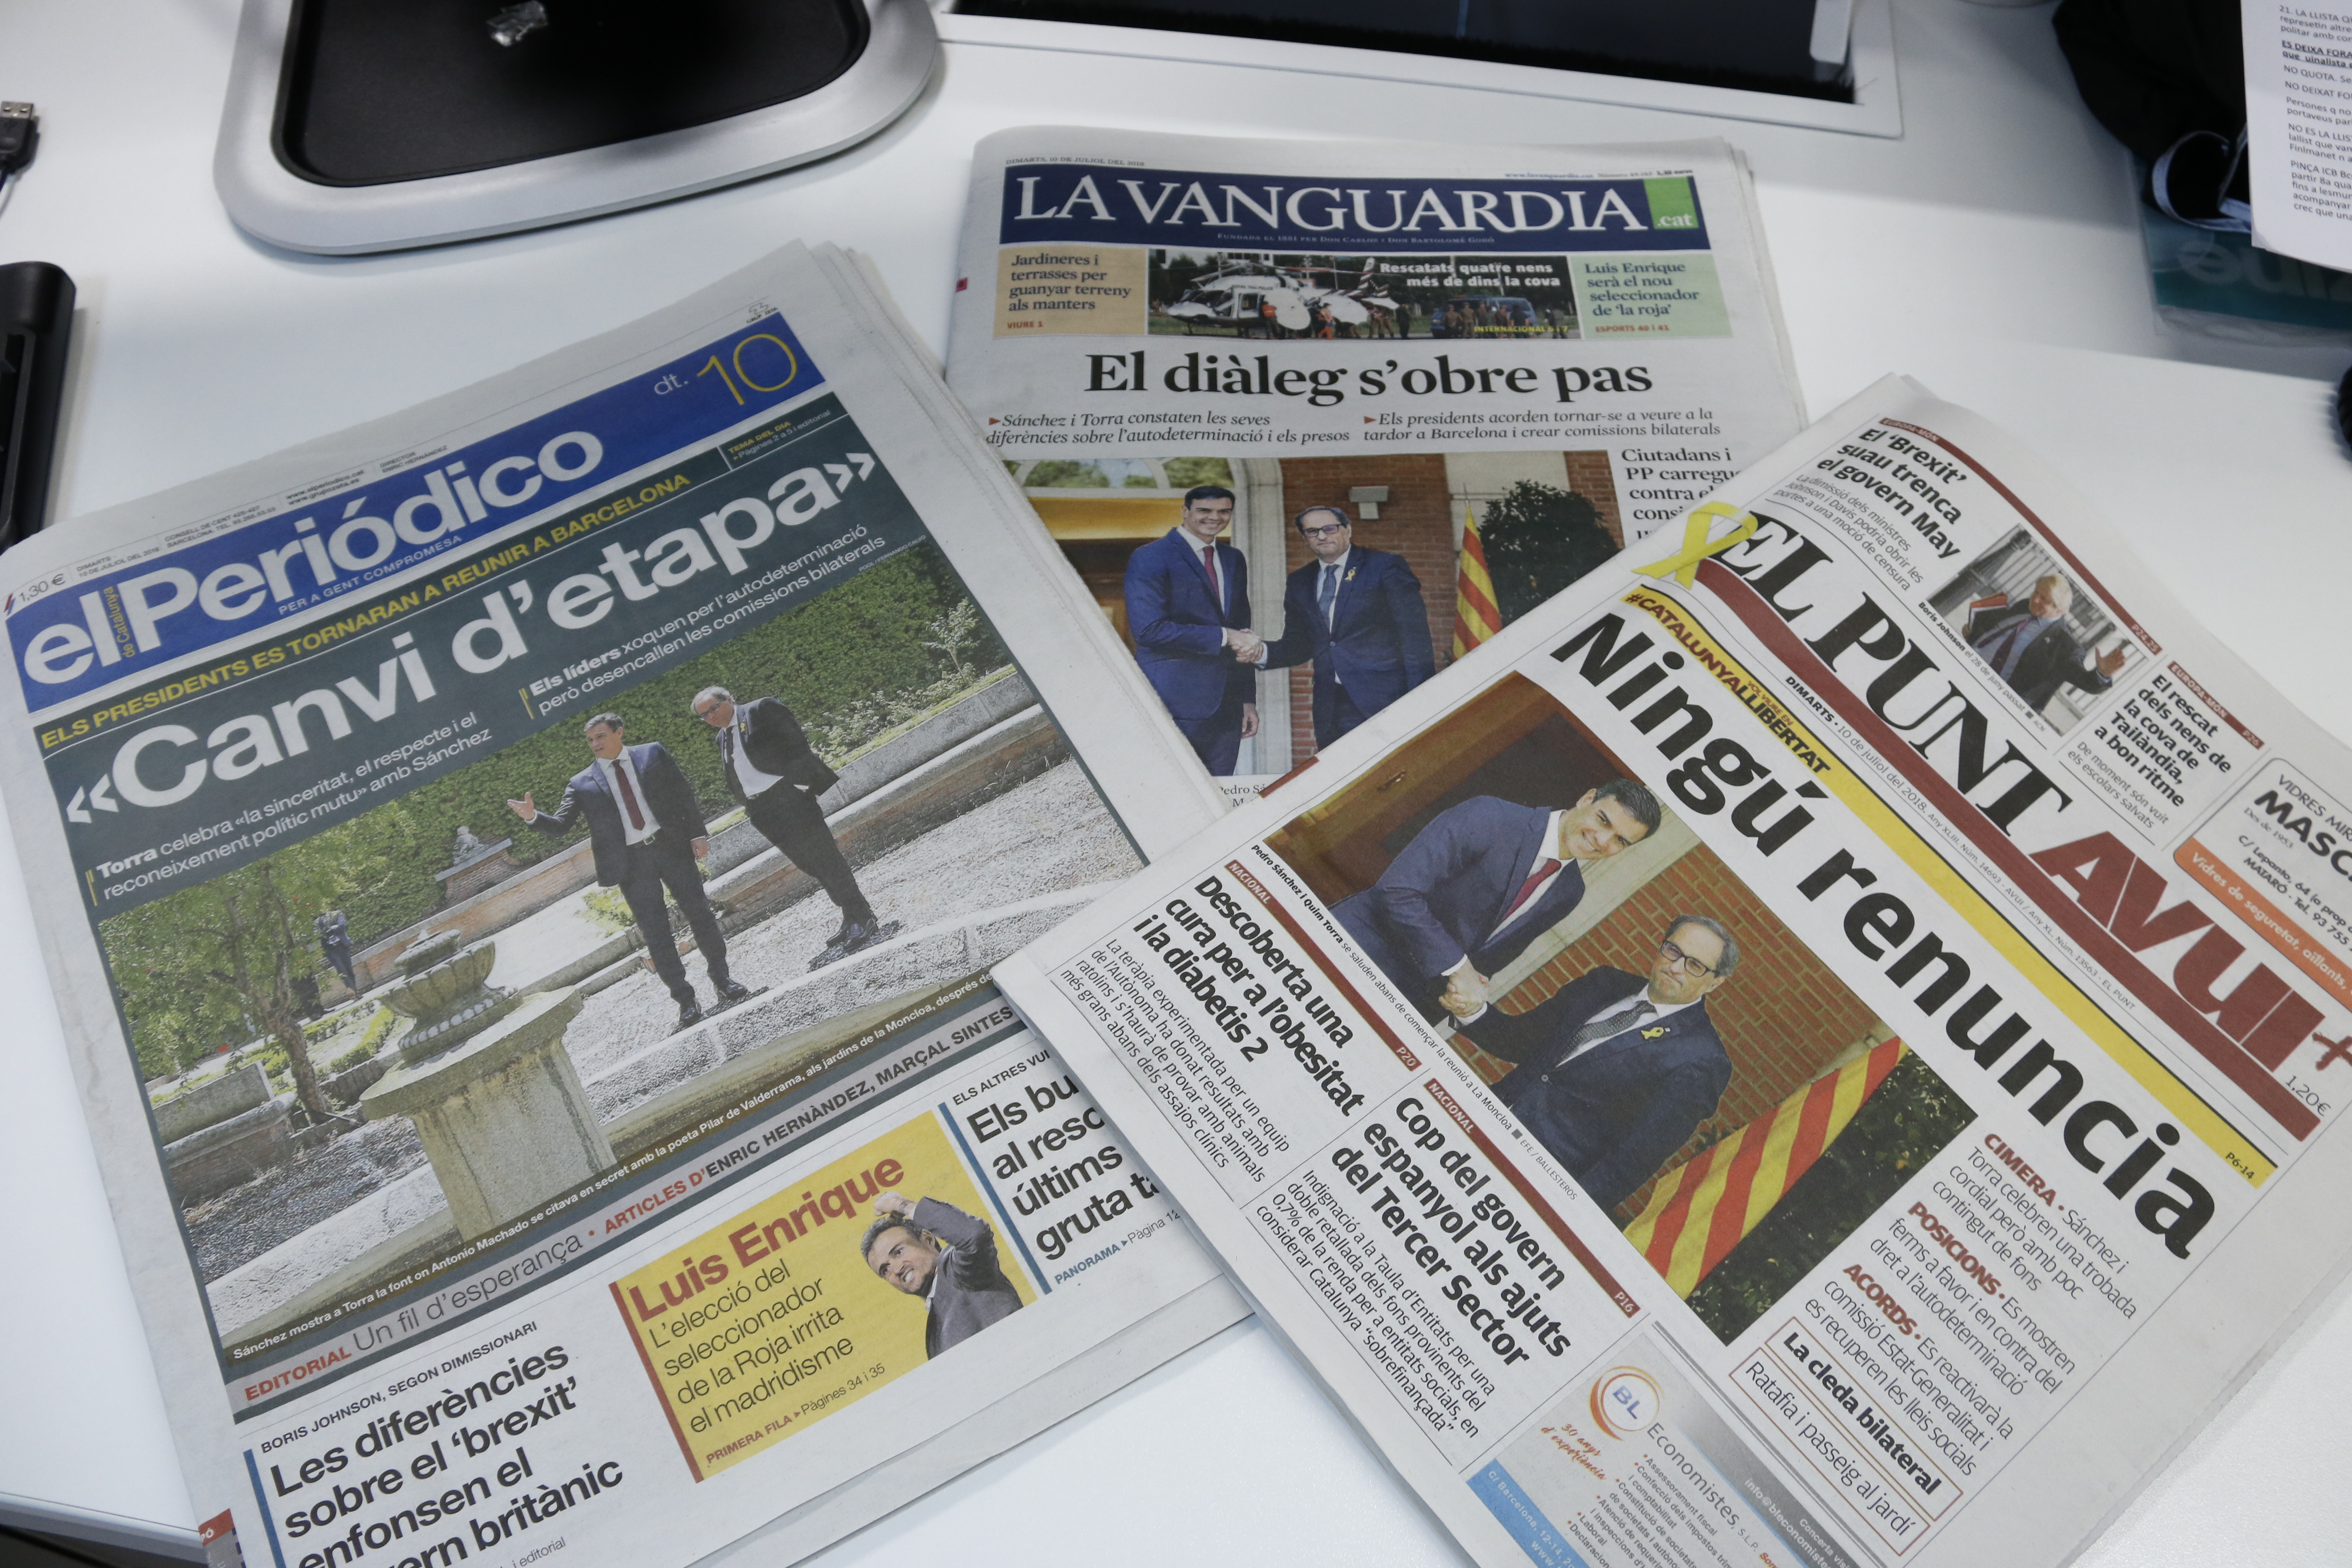 Newspapers react to presidents' meeting (by Guifré Jordan)